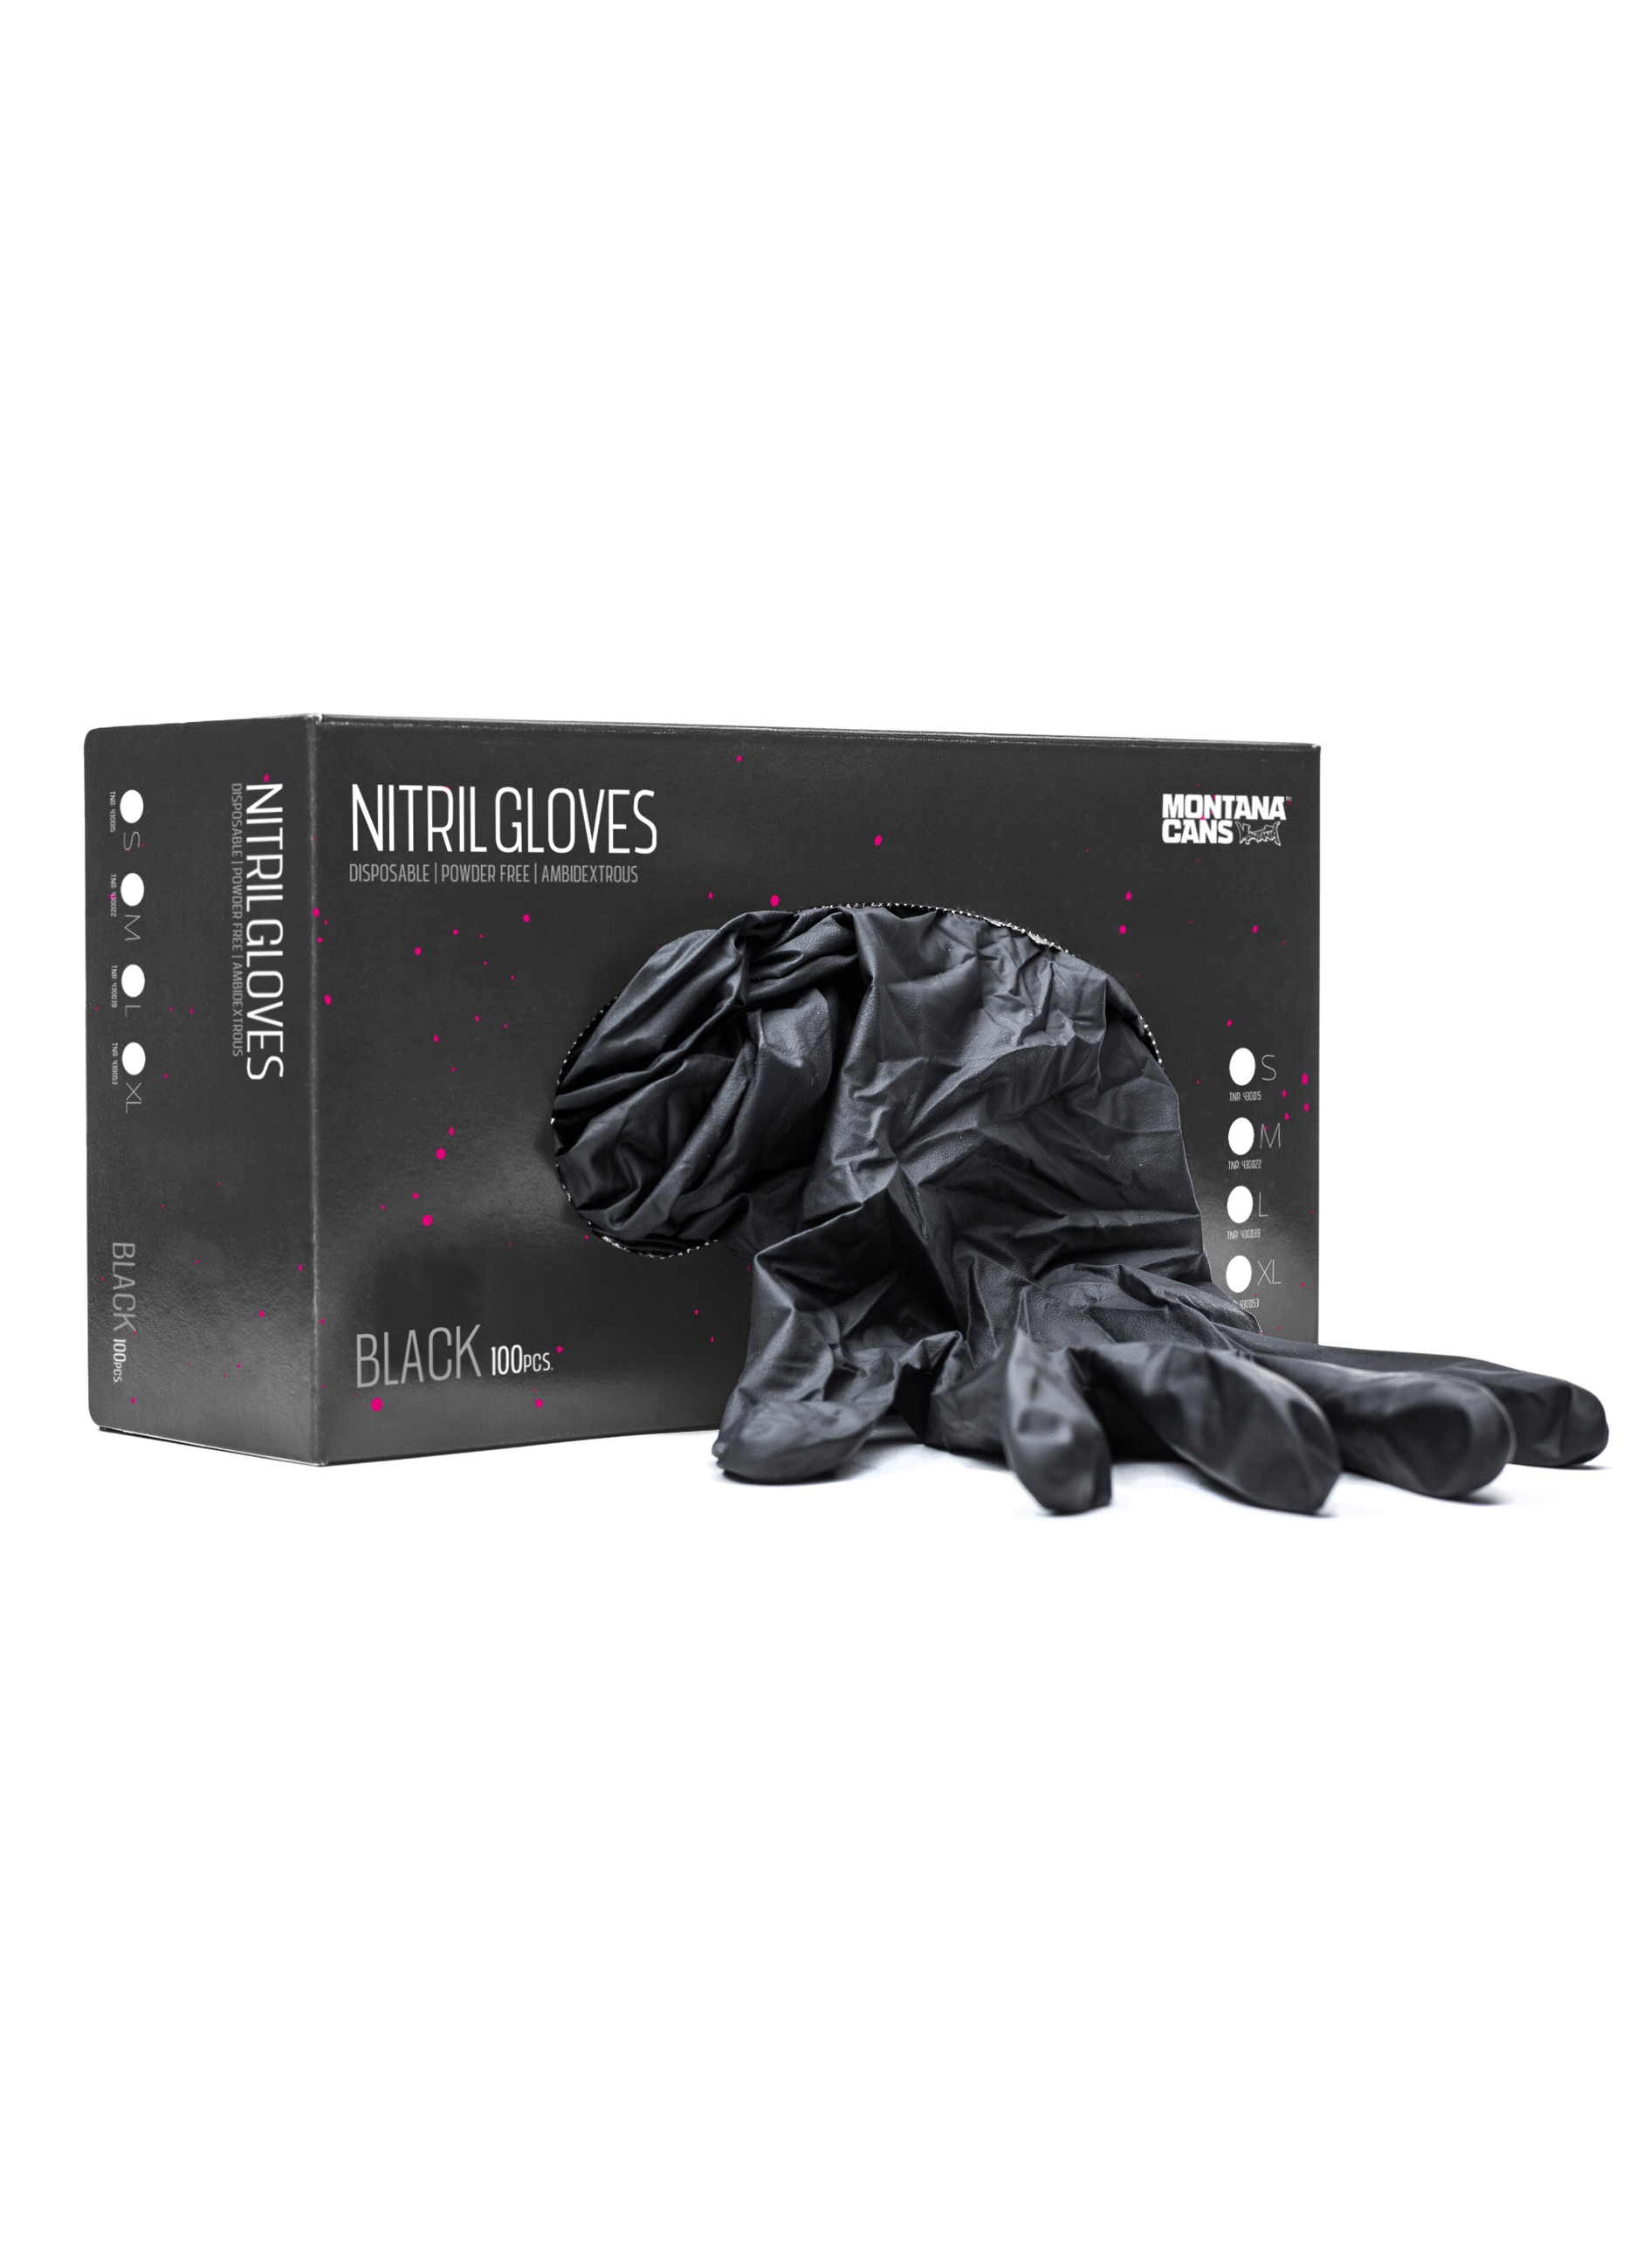 Montana Nitril Gloves